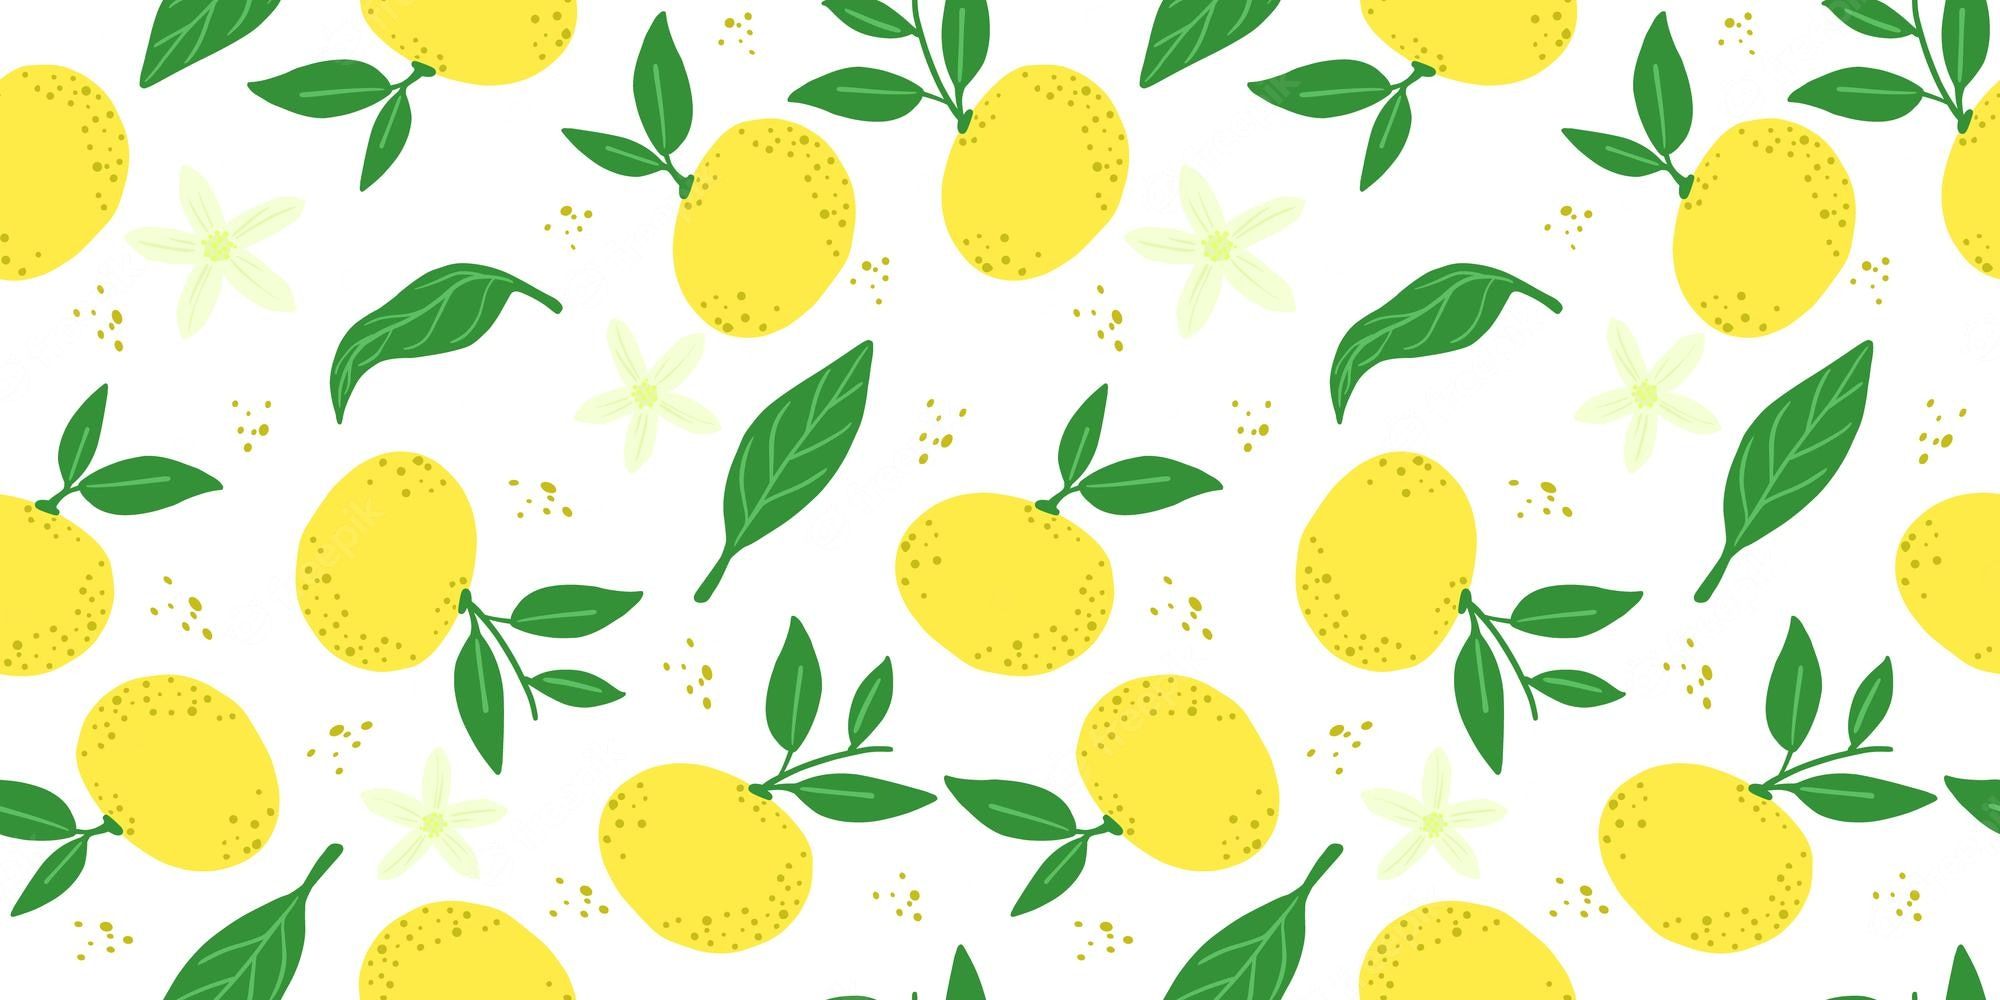 Lemonade wallpaper Image. Free Vectors, & PSD